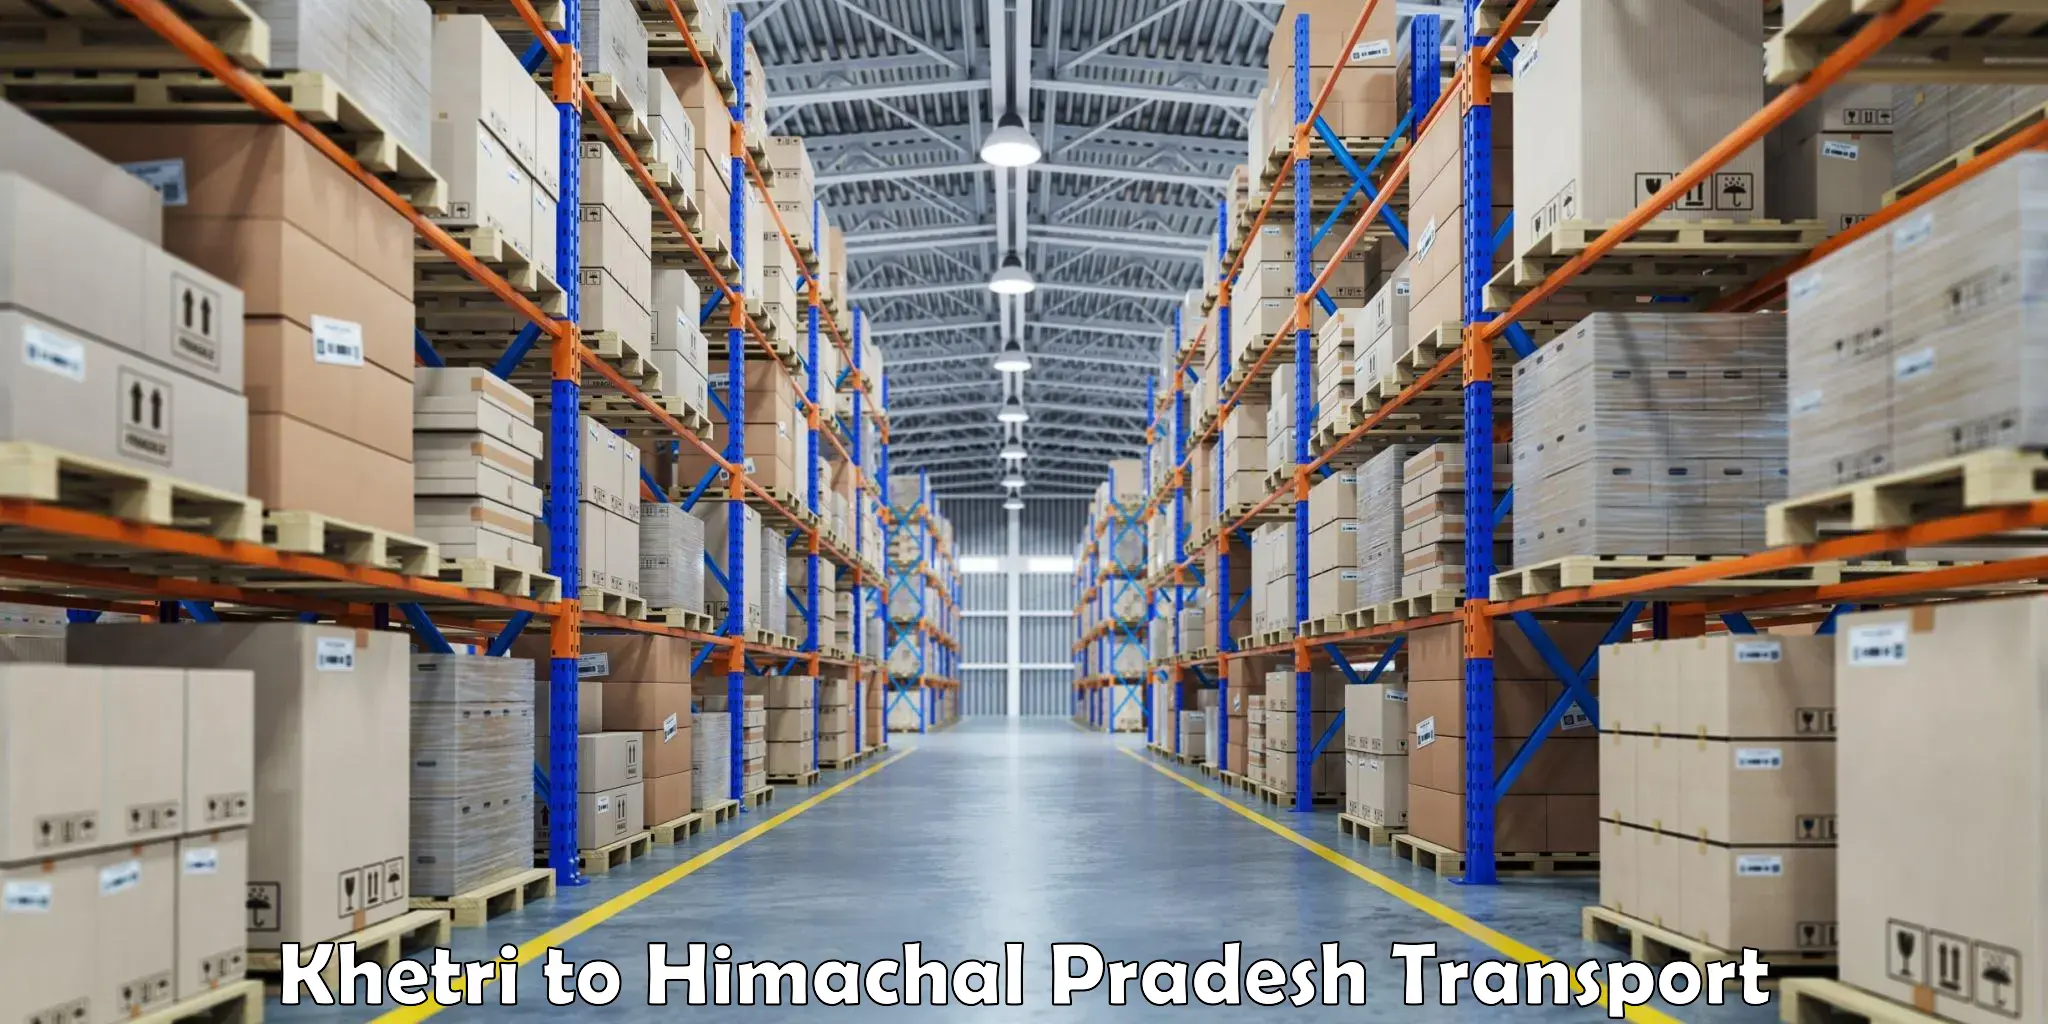 Truck transport companies in India Khetri to Himachal Pradesh